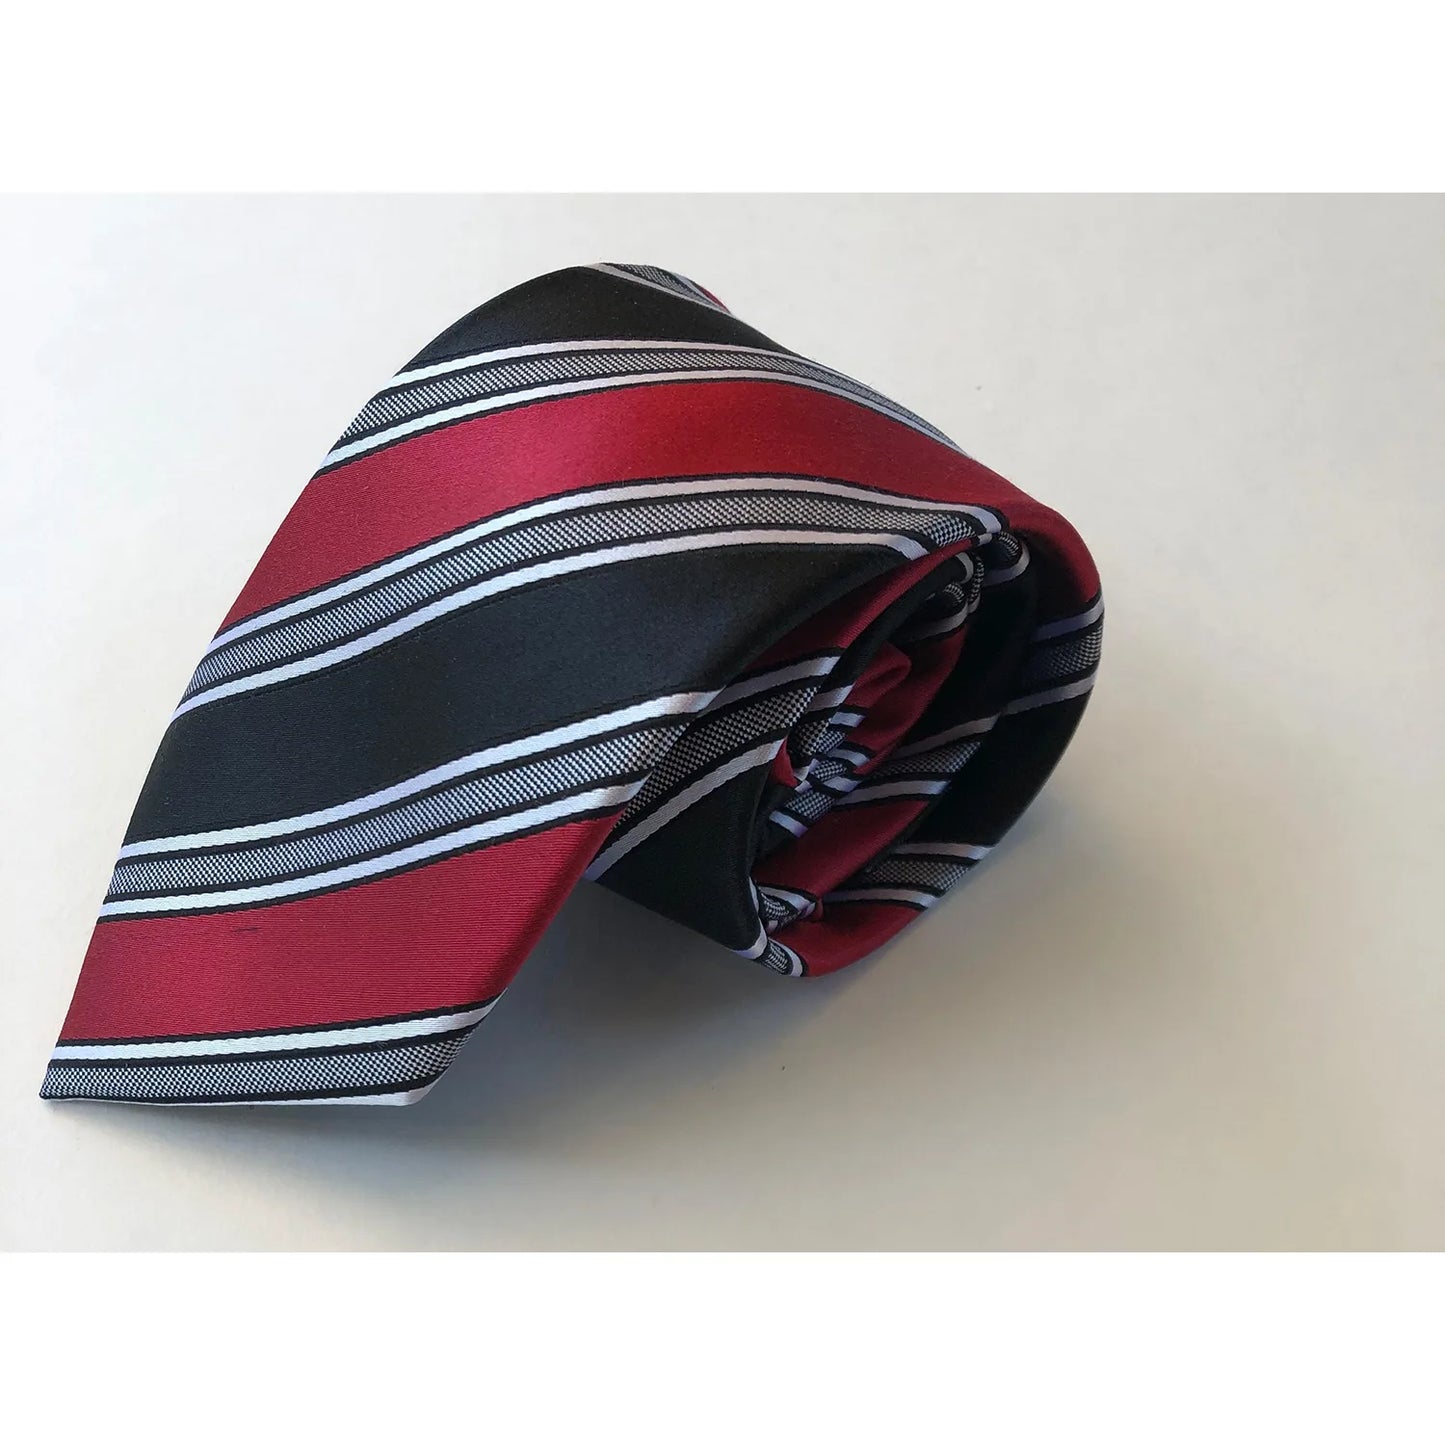 Scotty Z Tie - Black with Crimson/Silver/White Stripes